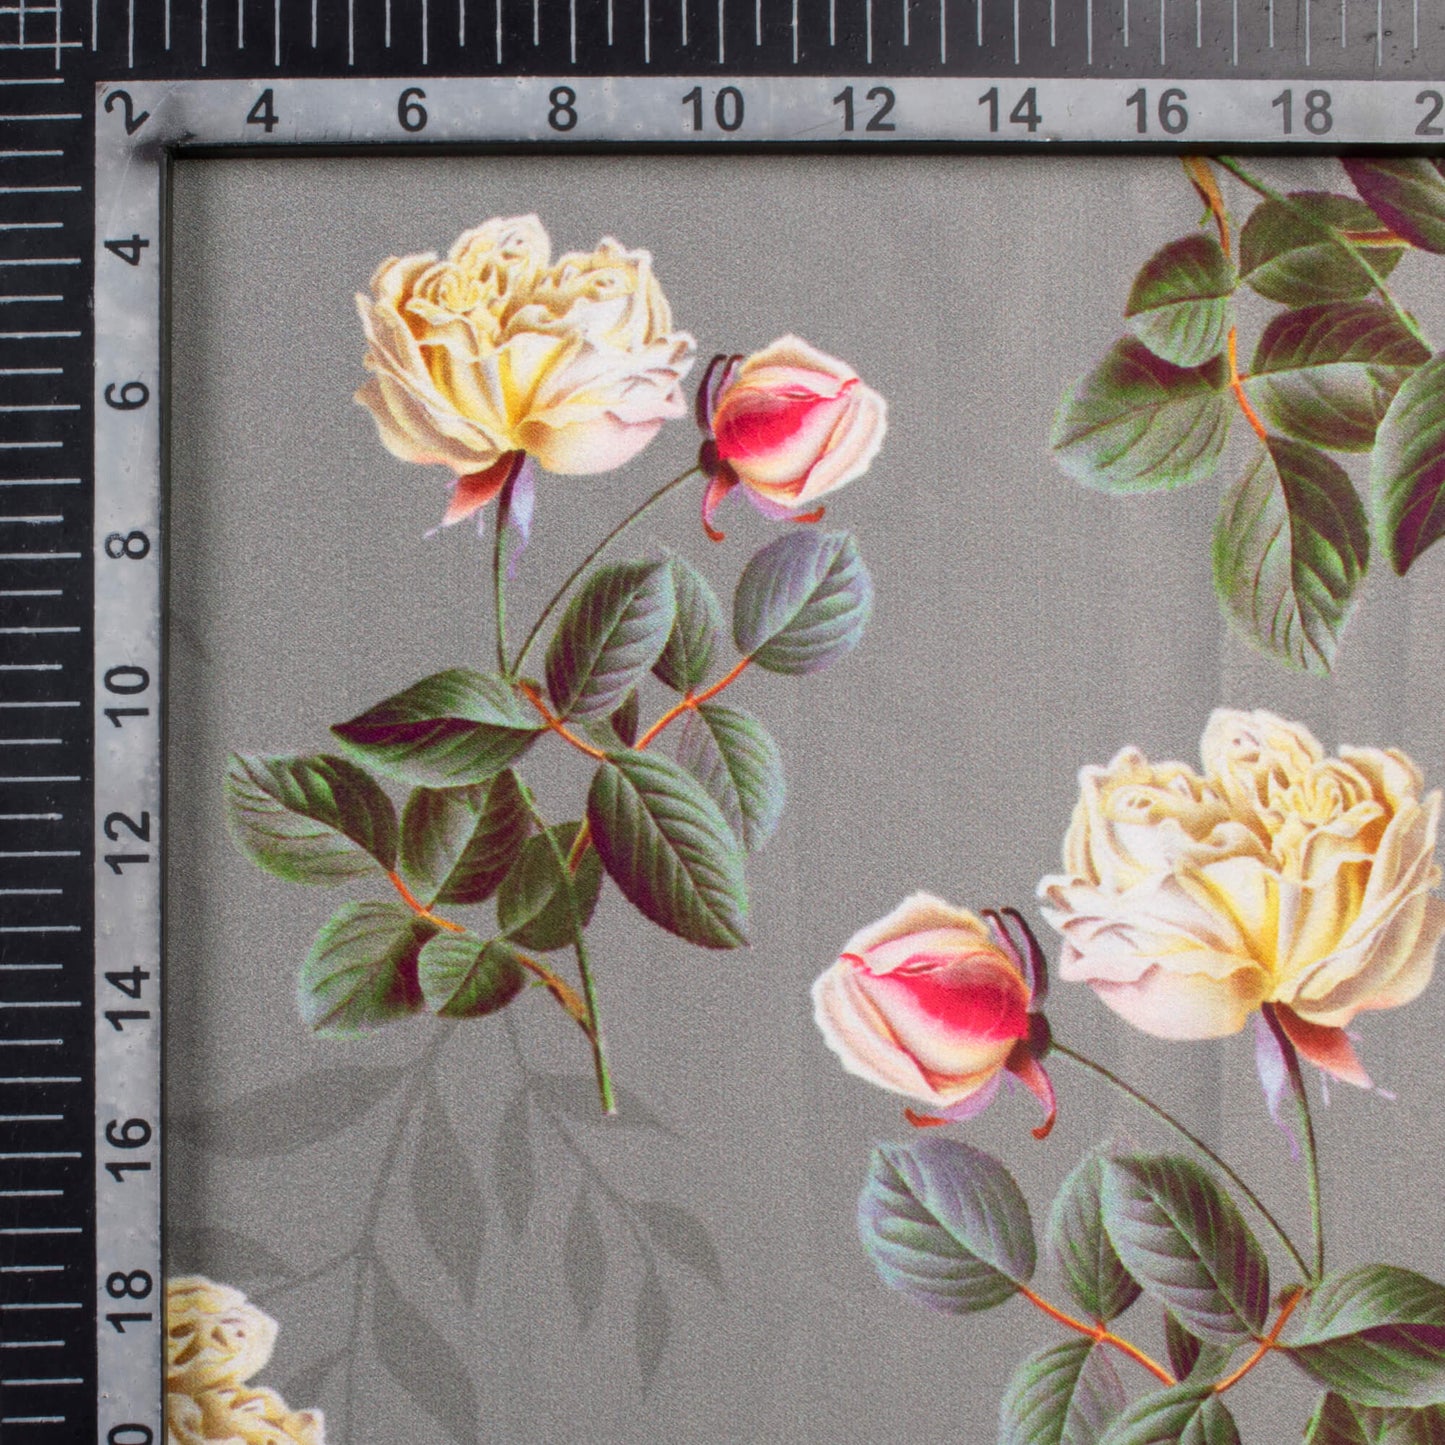 Lava Grey And Fern Green Floral Pattern Digital Print Lush Satin Fabric